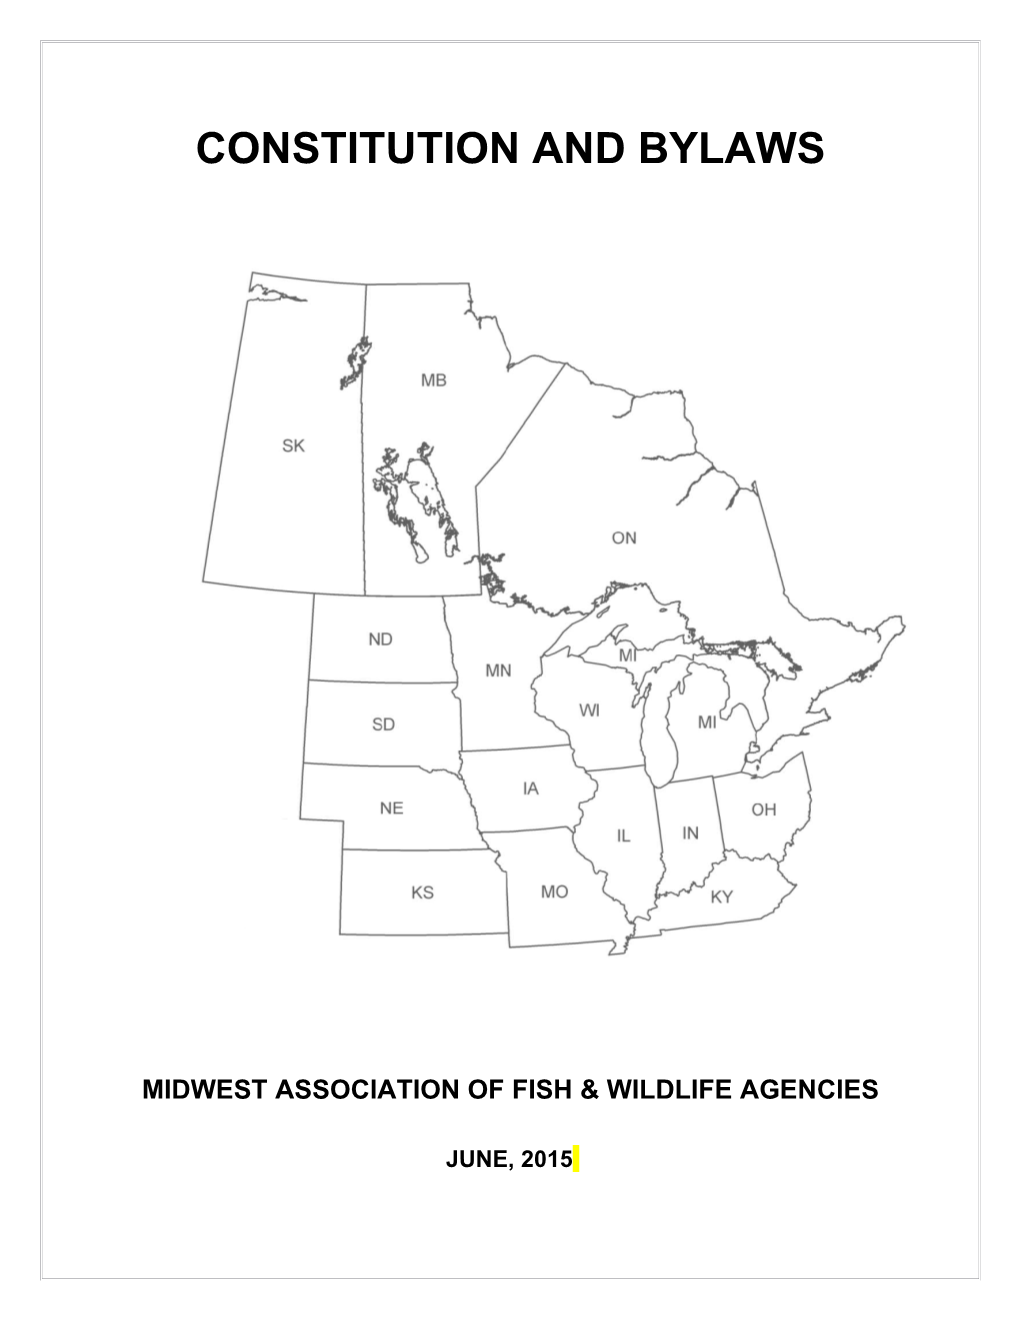 Midwest Association of Fish & Wildlife Agencies